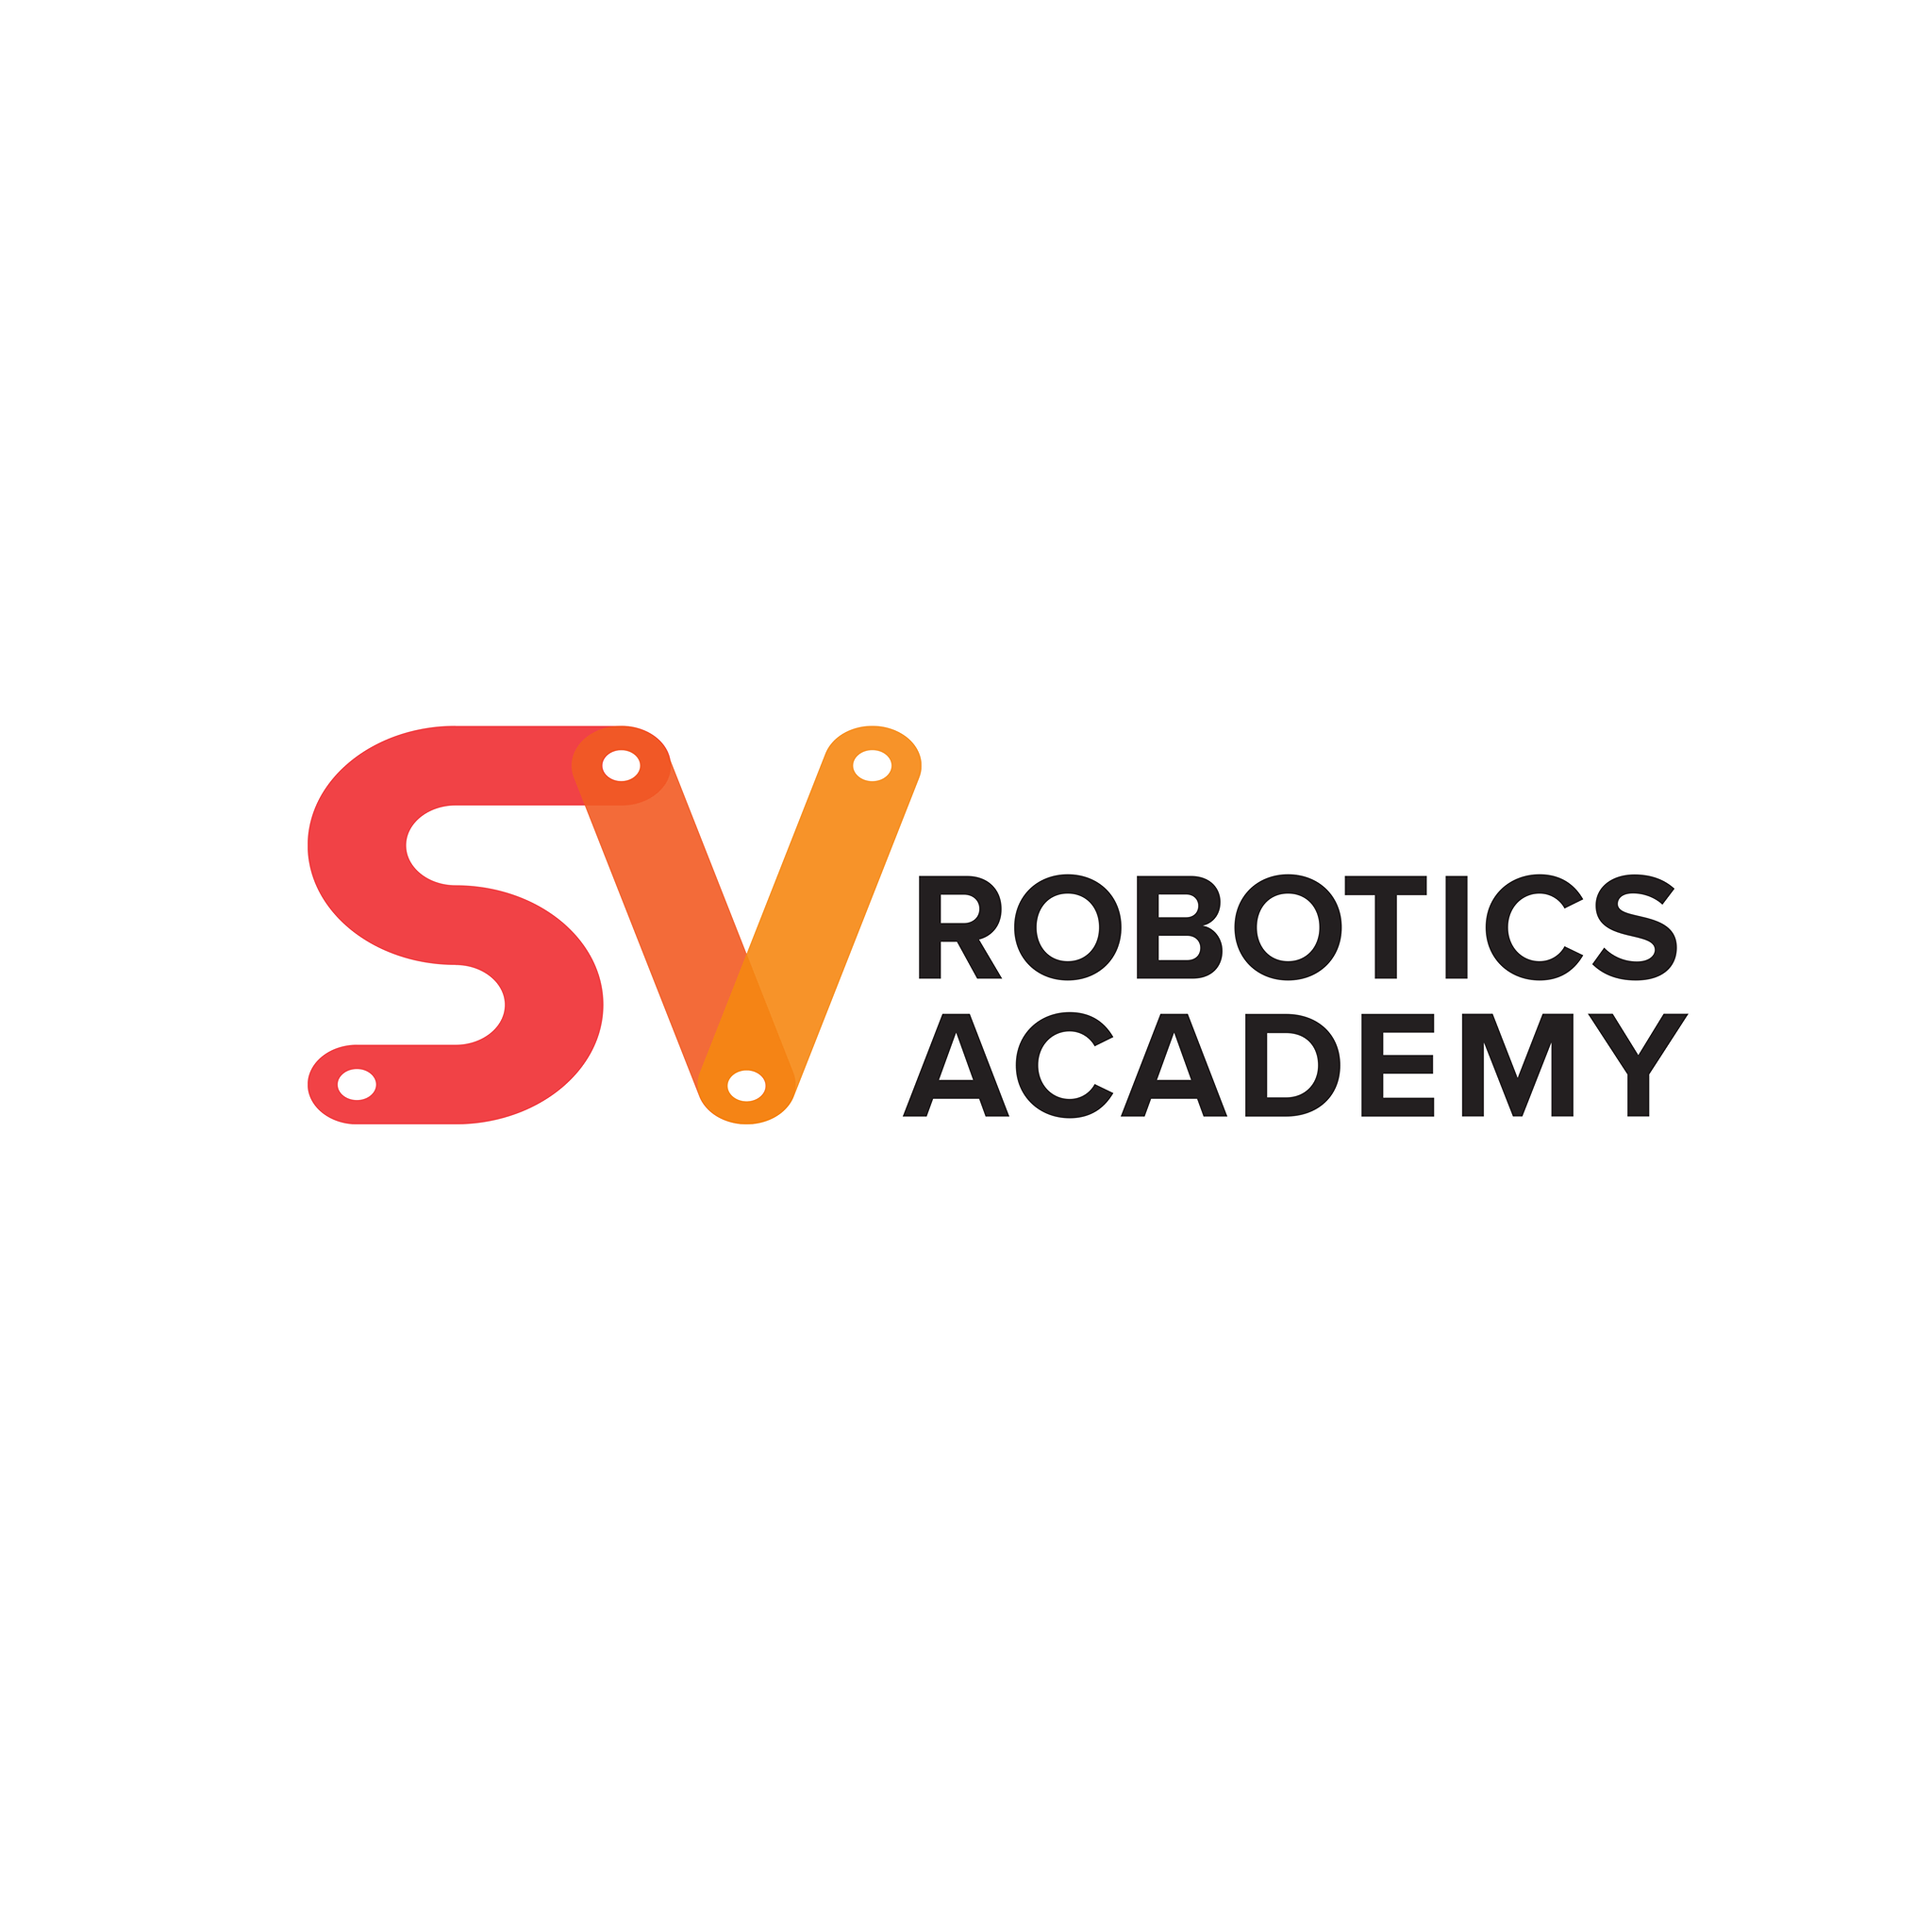 SV Robotics Academy